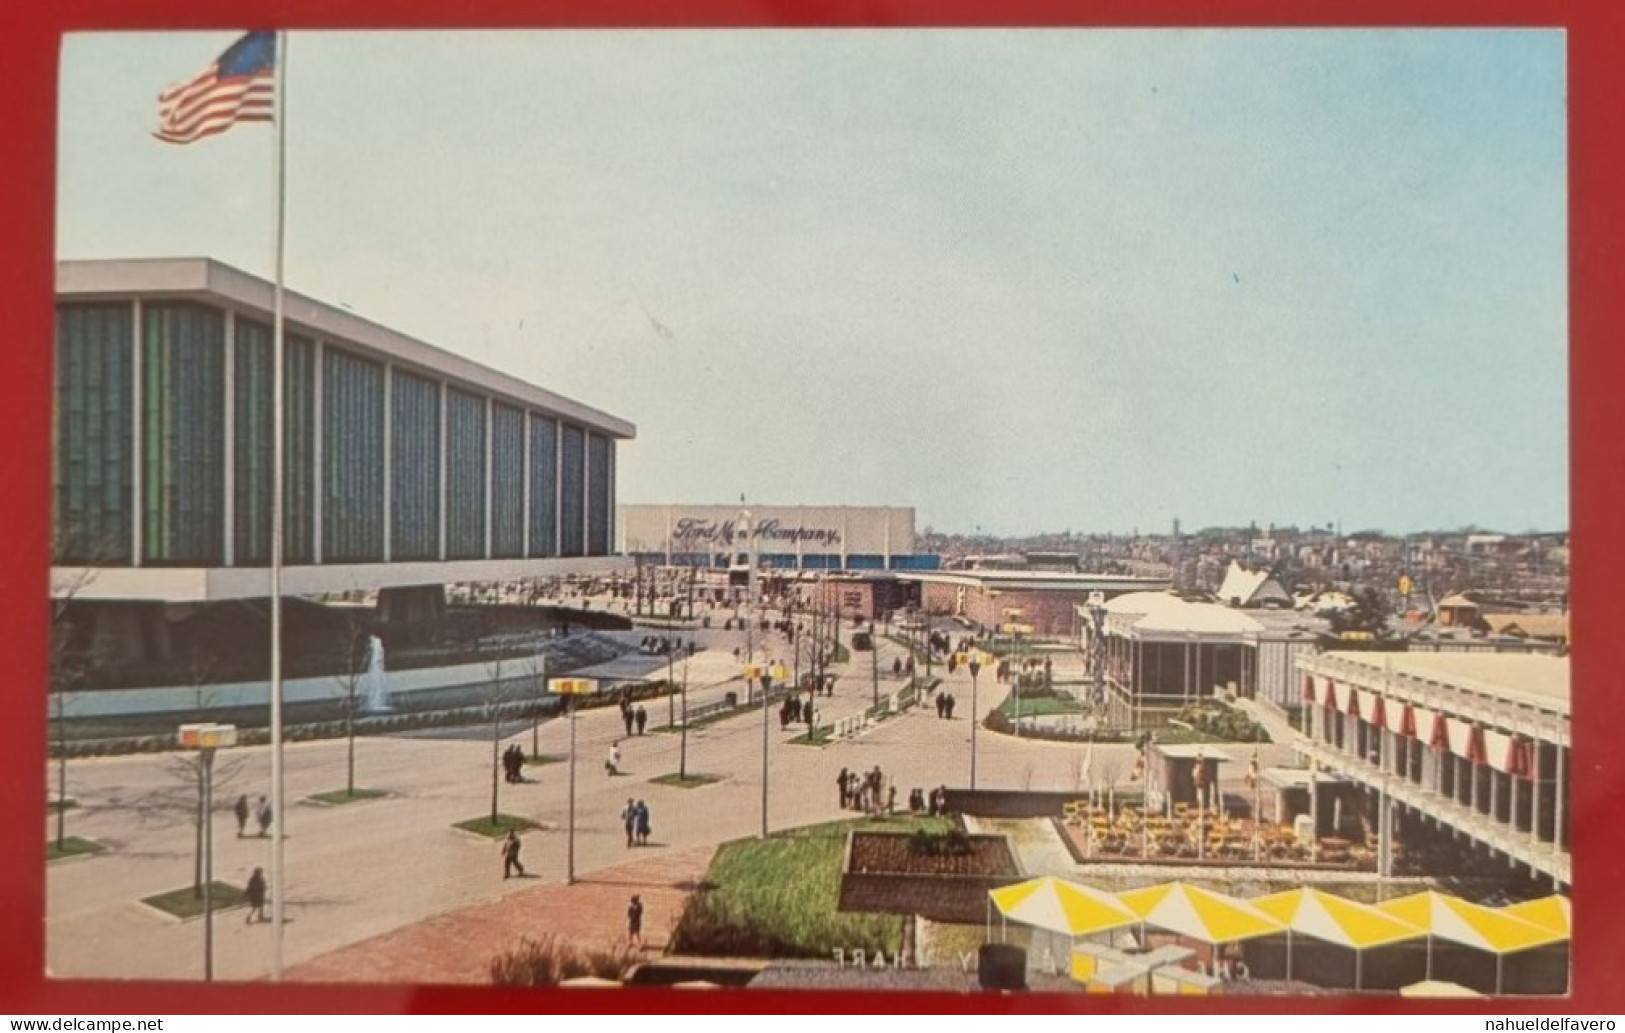 Uncirculated Postcard - USA - NY, NEW YORK WORLD'S FAIR 1964-65 - KENNEDY CIRCLE LOOKING SOUTHWEST - Ausstellungen